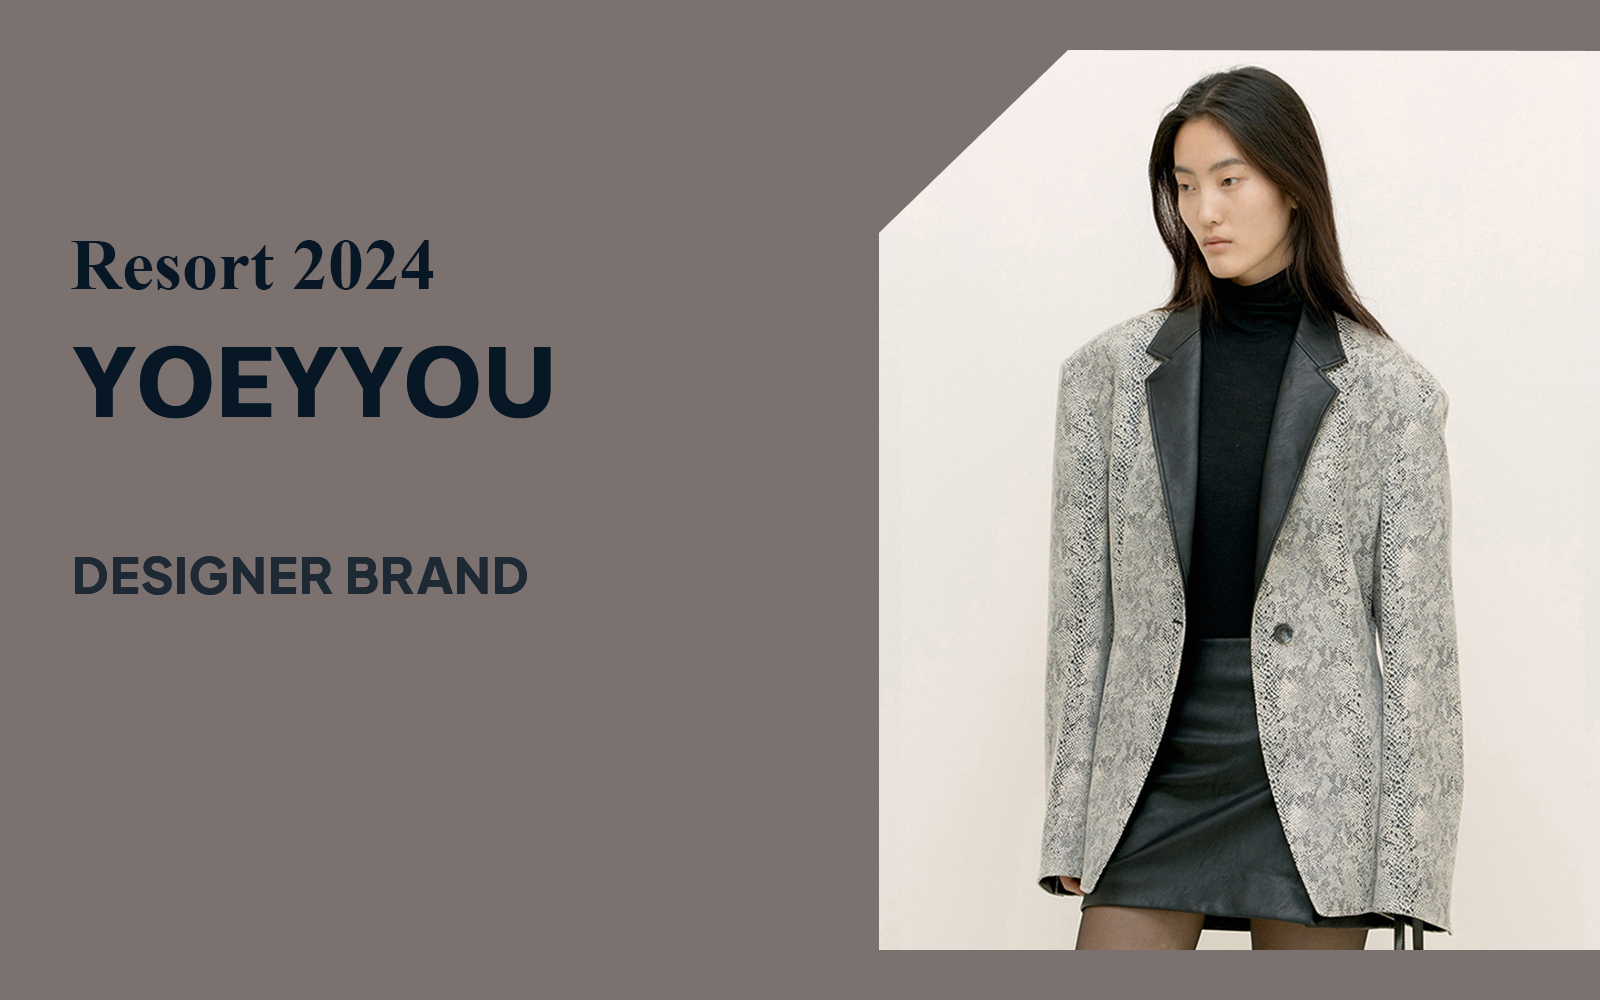 Sexy and Modern -- The Analysis of Yoeyyou The Womenswear Designer Brand